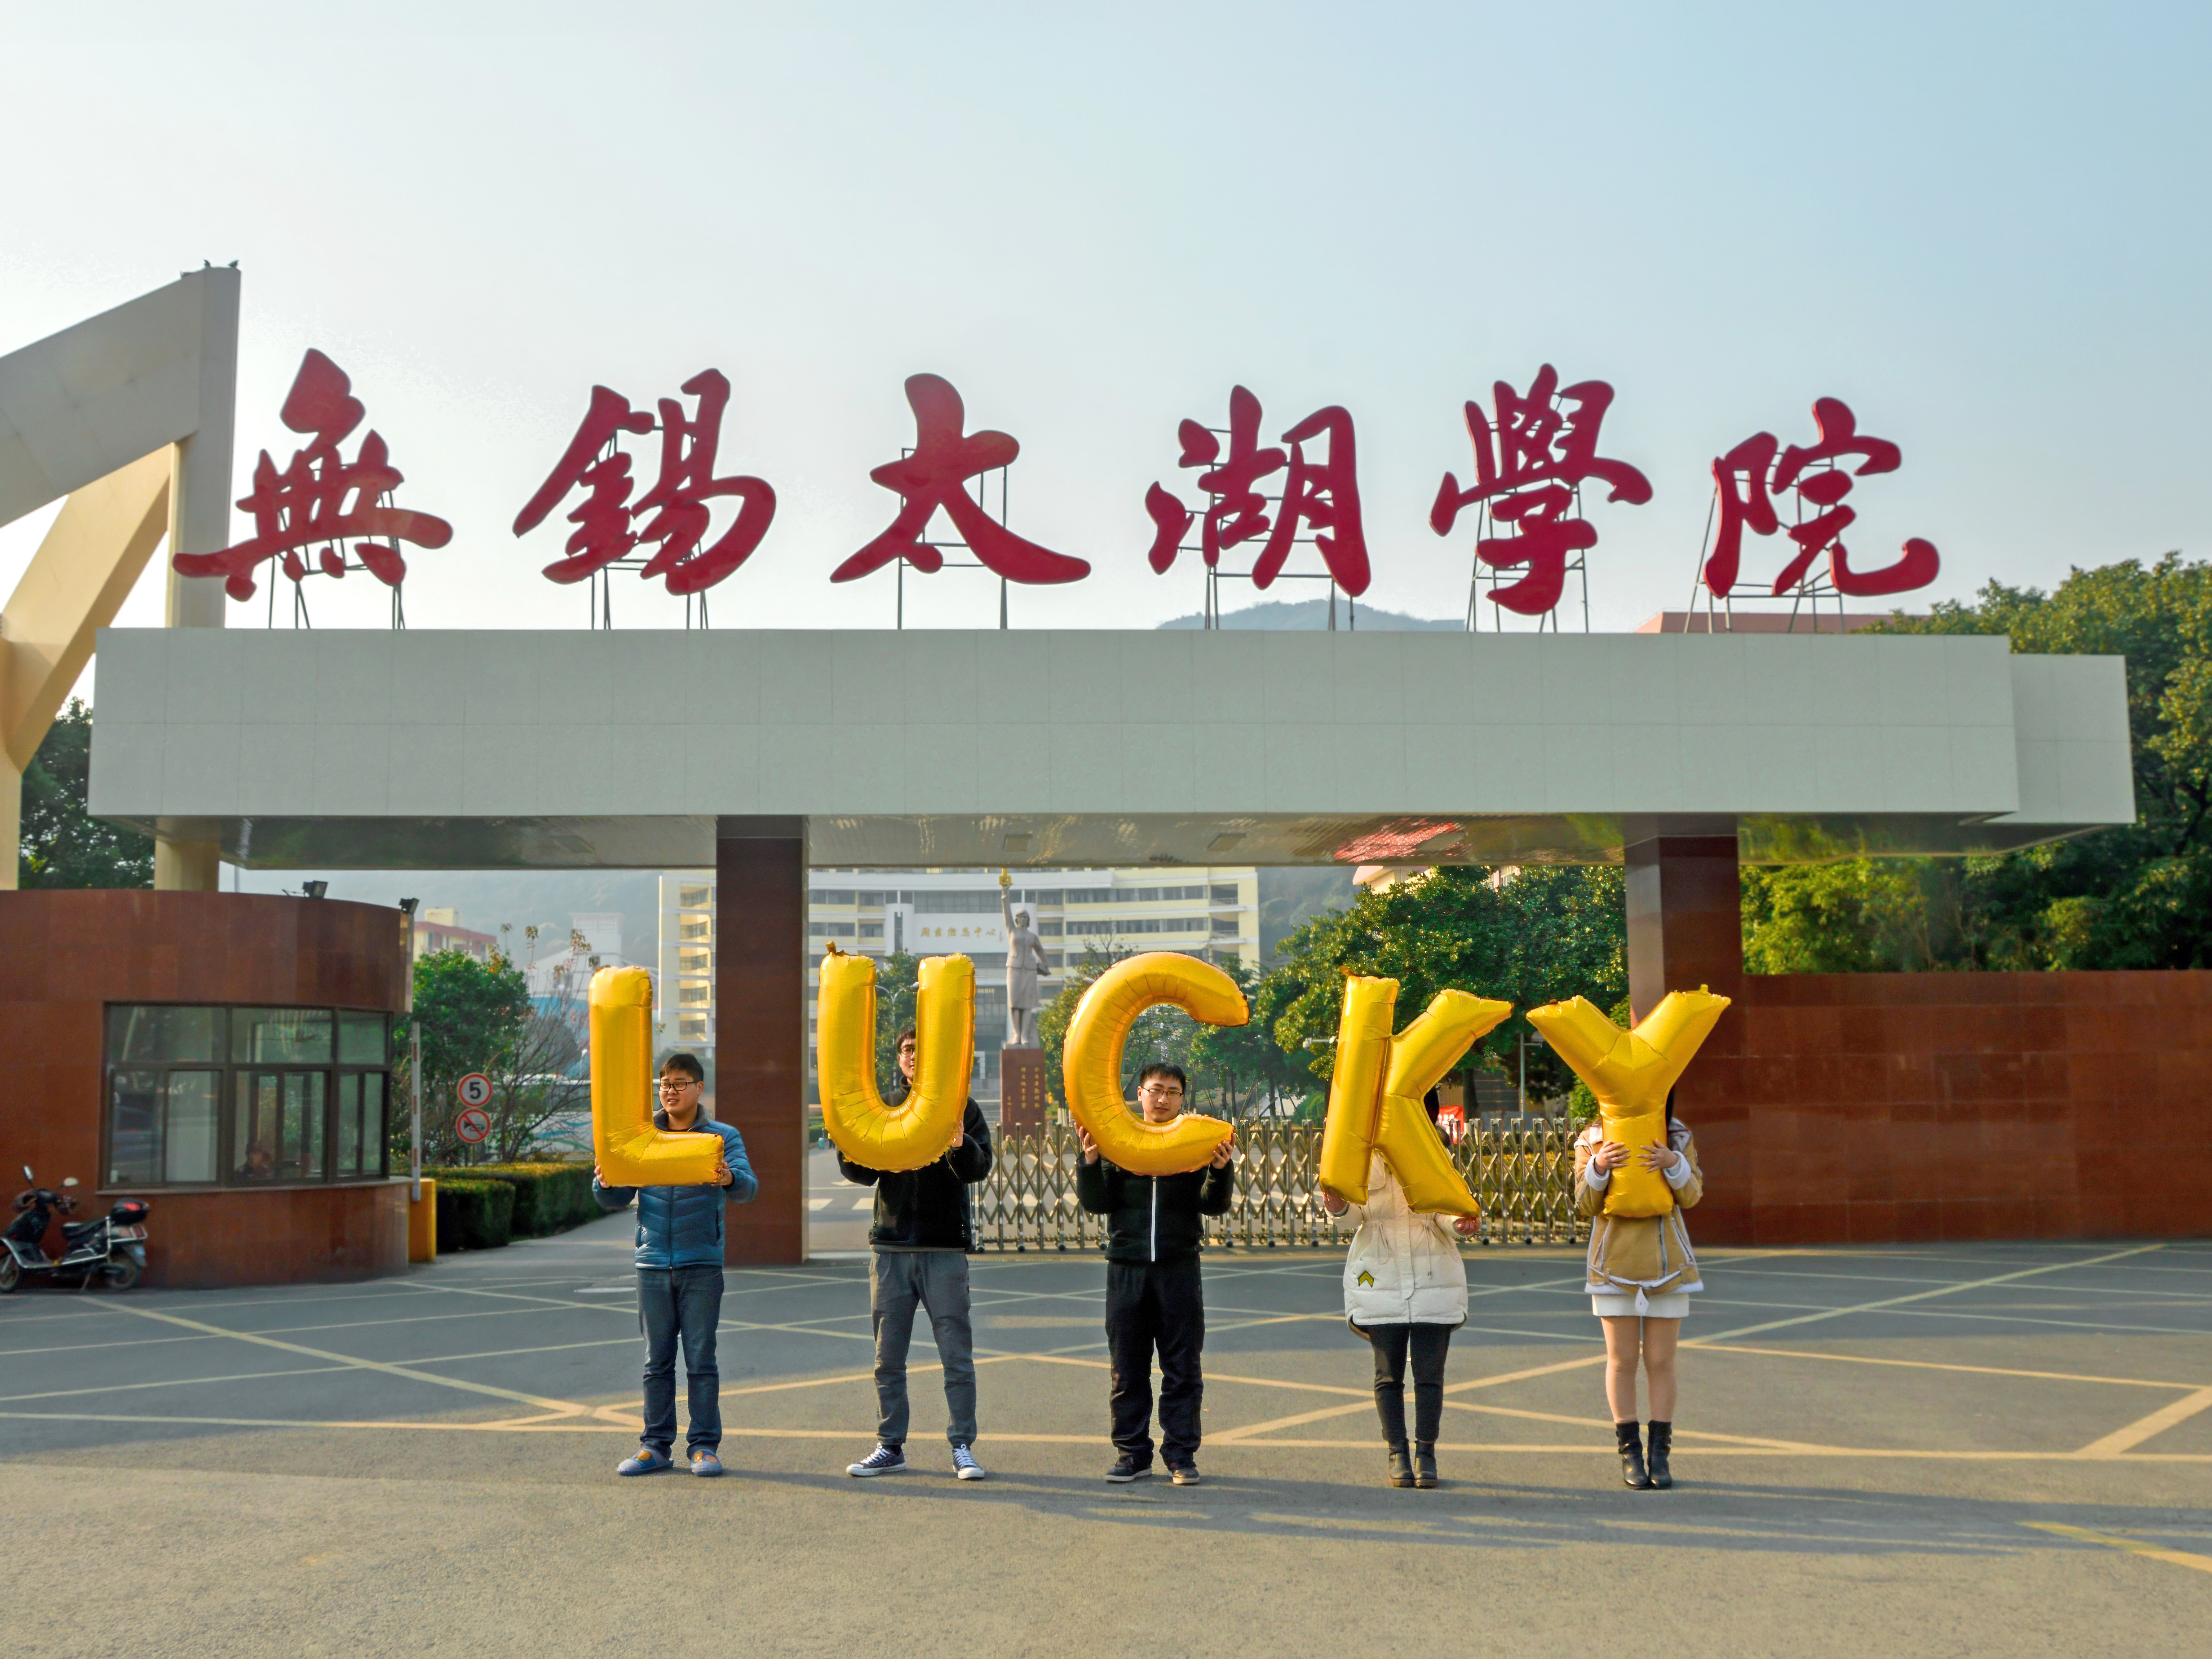 China, Wuxi, Taihu University of Wuxi - Lucky, Silence was Golden, gold balloons